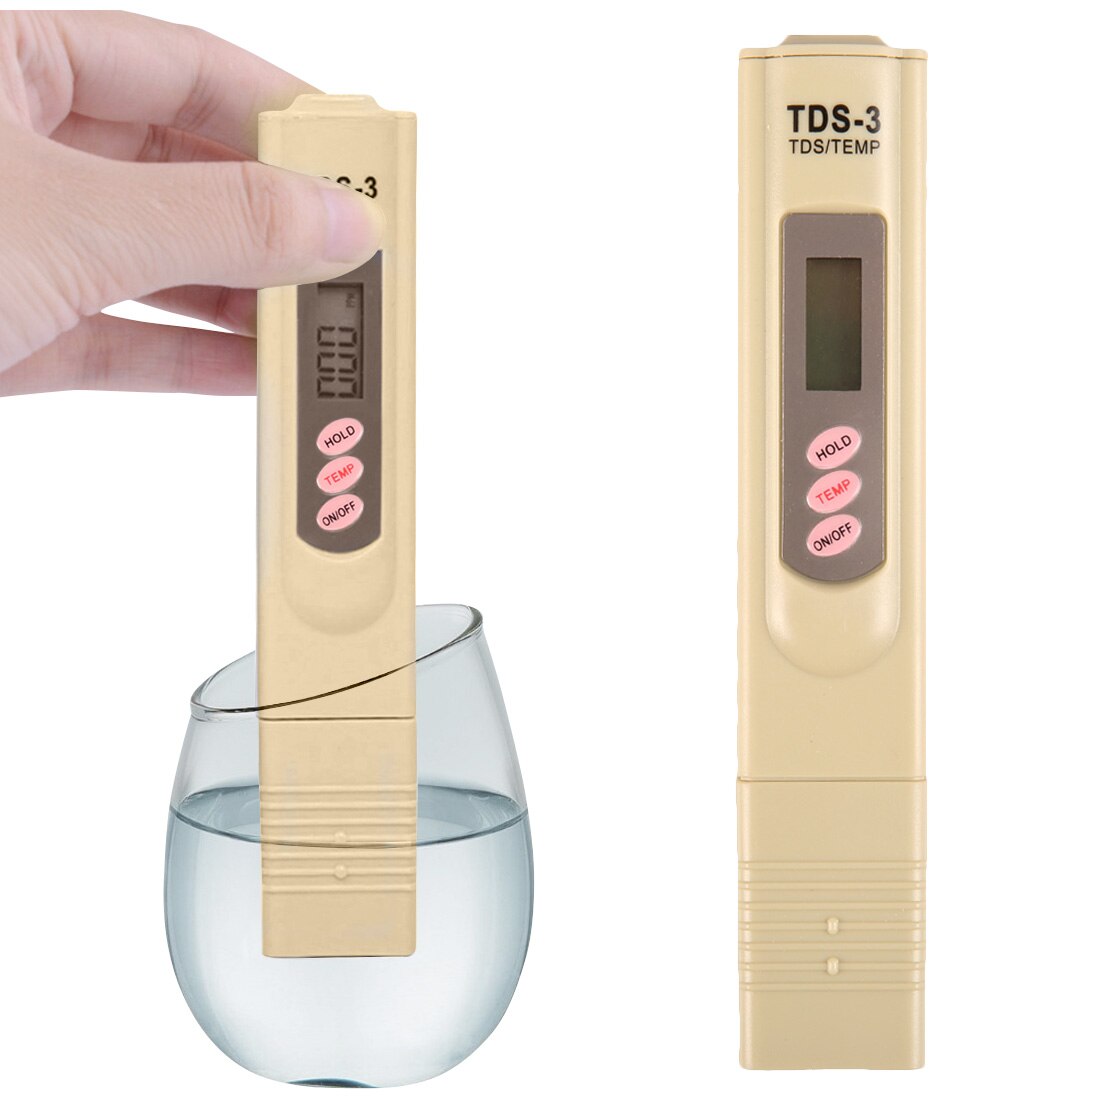 1Pcs Draagbare Pen Digitale Tds Meter Filter Meten Water Zuiverheid Tester Kleur willekeurige